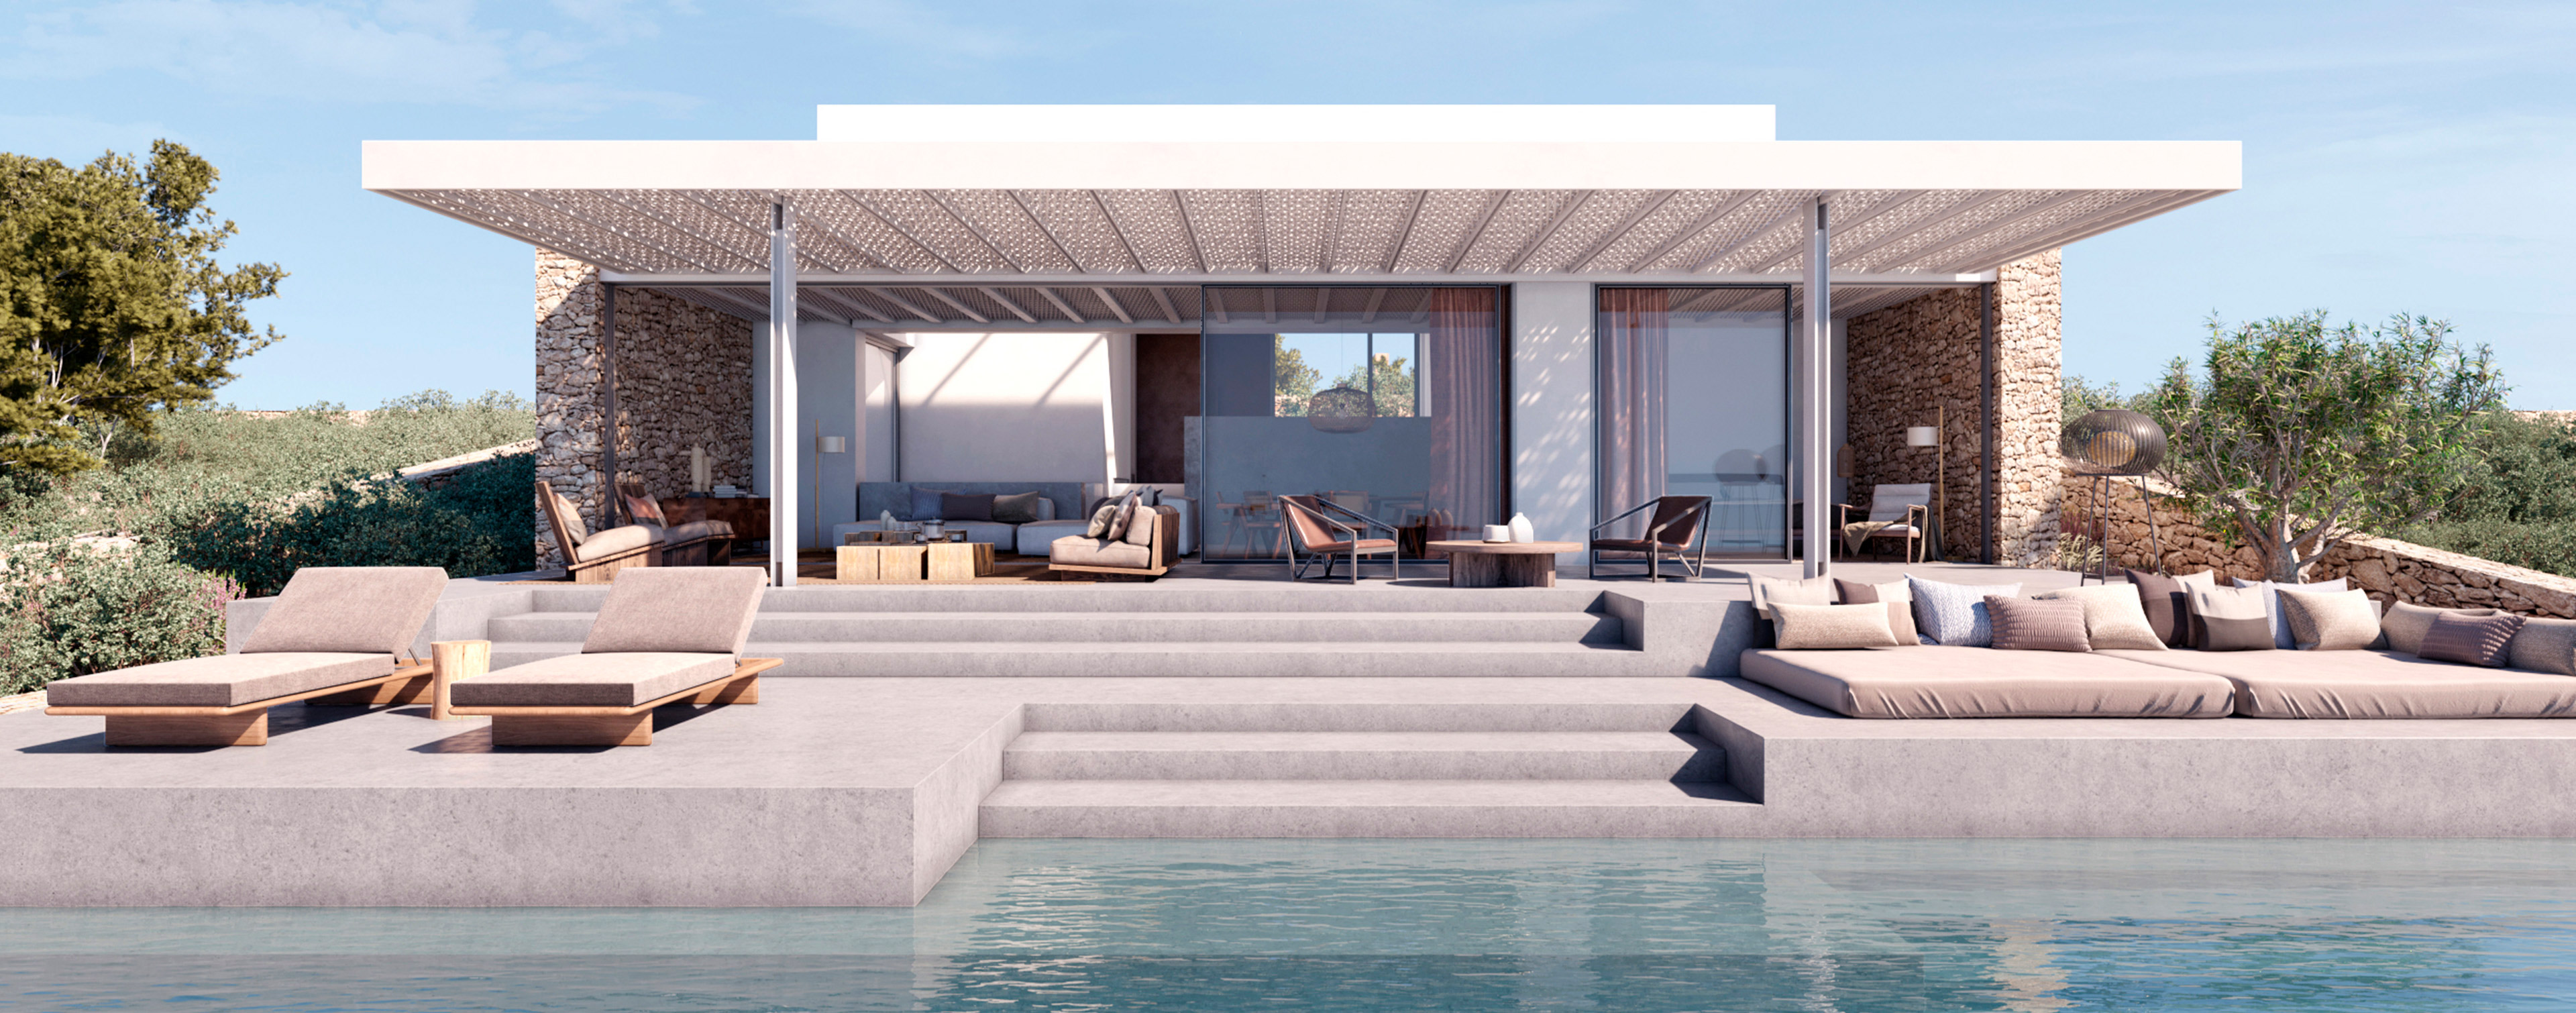 luv studio luxury architects menorca son ganxo house IMG 01 - Son Ganxo House